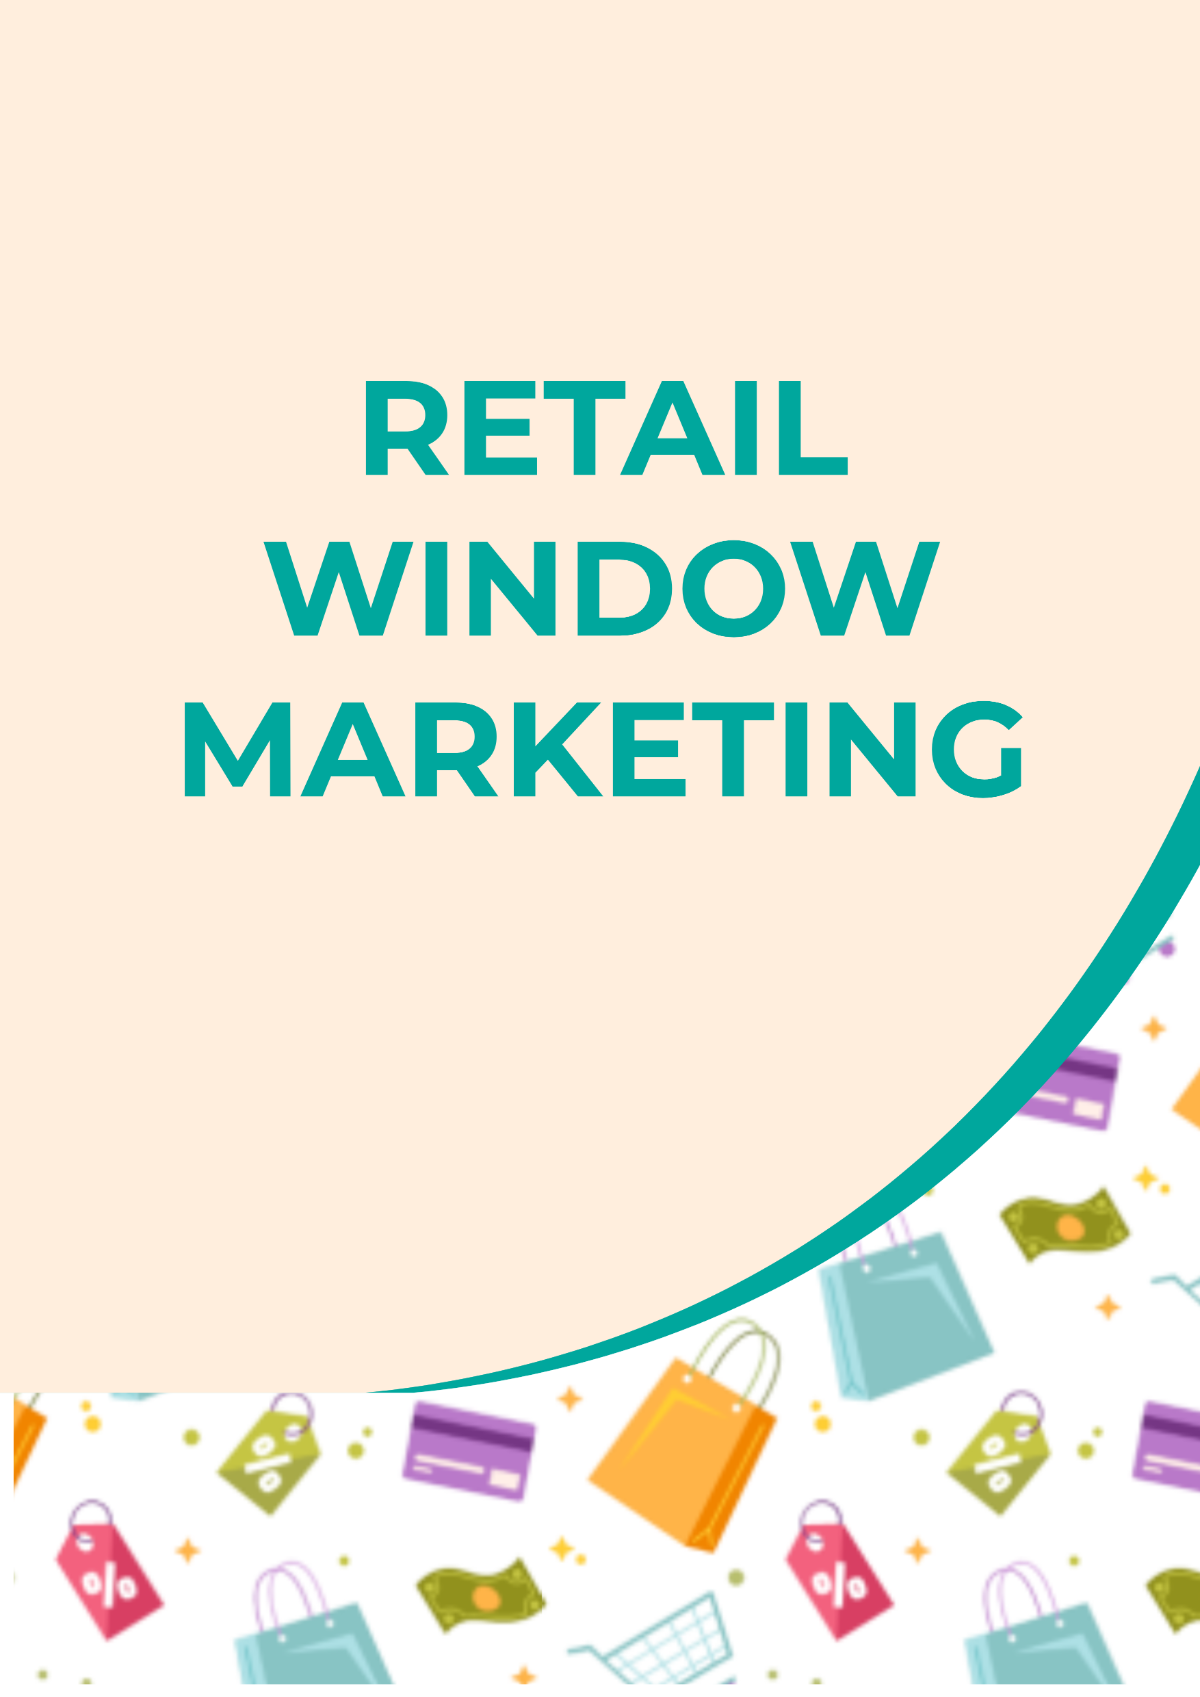 Retail Window Marketing Sign